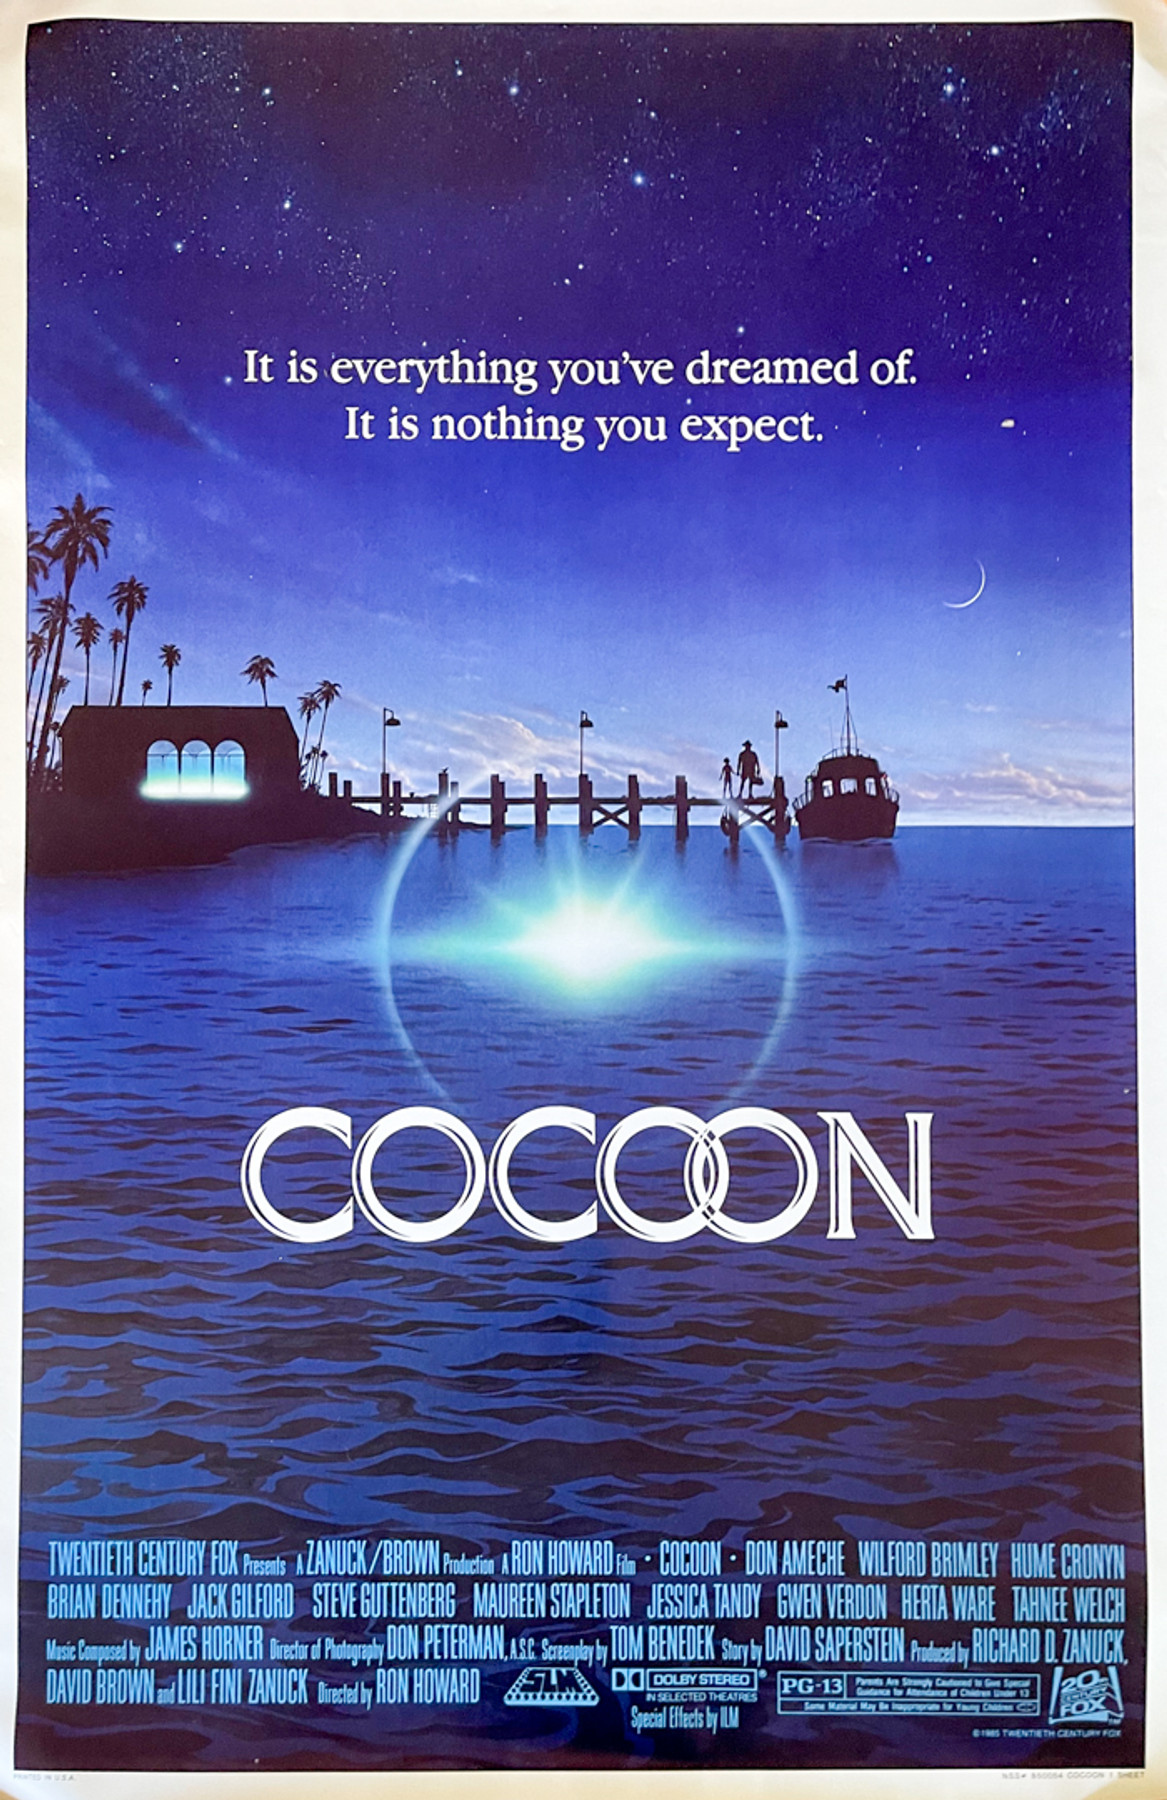 McAuliffe Matinee: Cocoon (PG-13, 1985, 1h 57m) thumbnail Photo